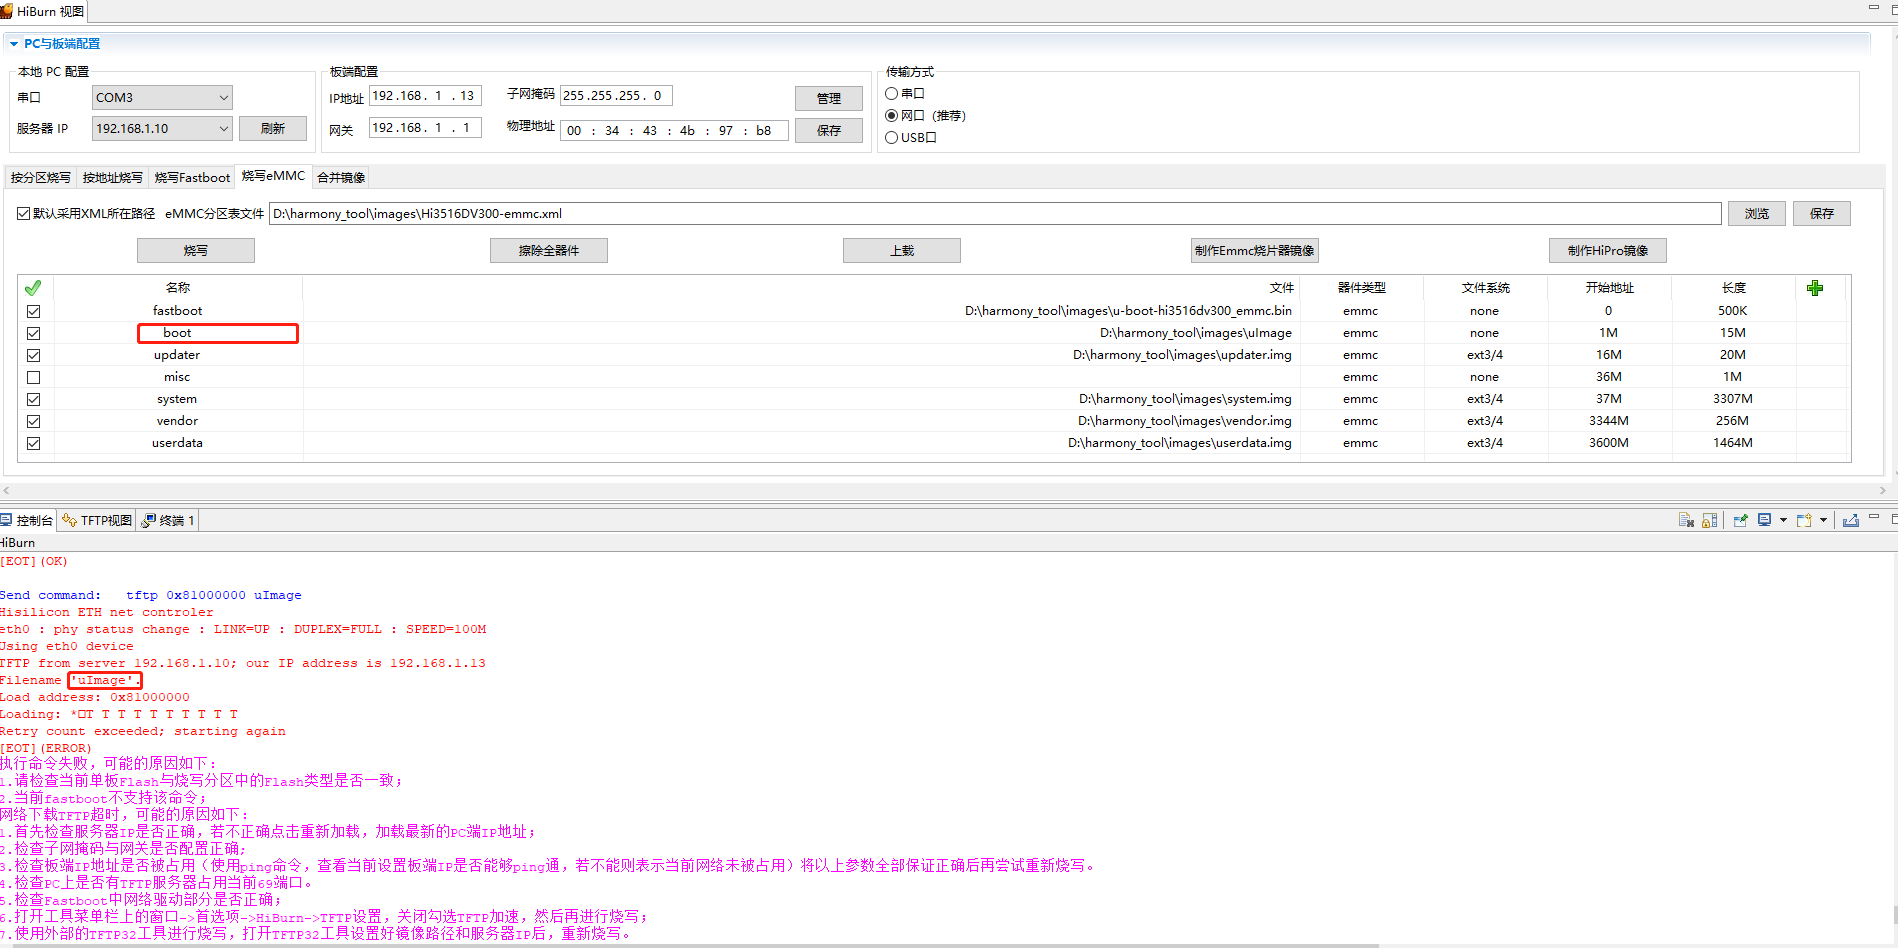 Hitool 烧录Hi3516DV300 超时-开源基础软件社区